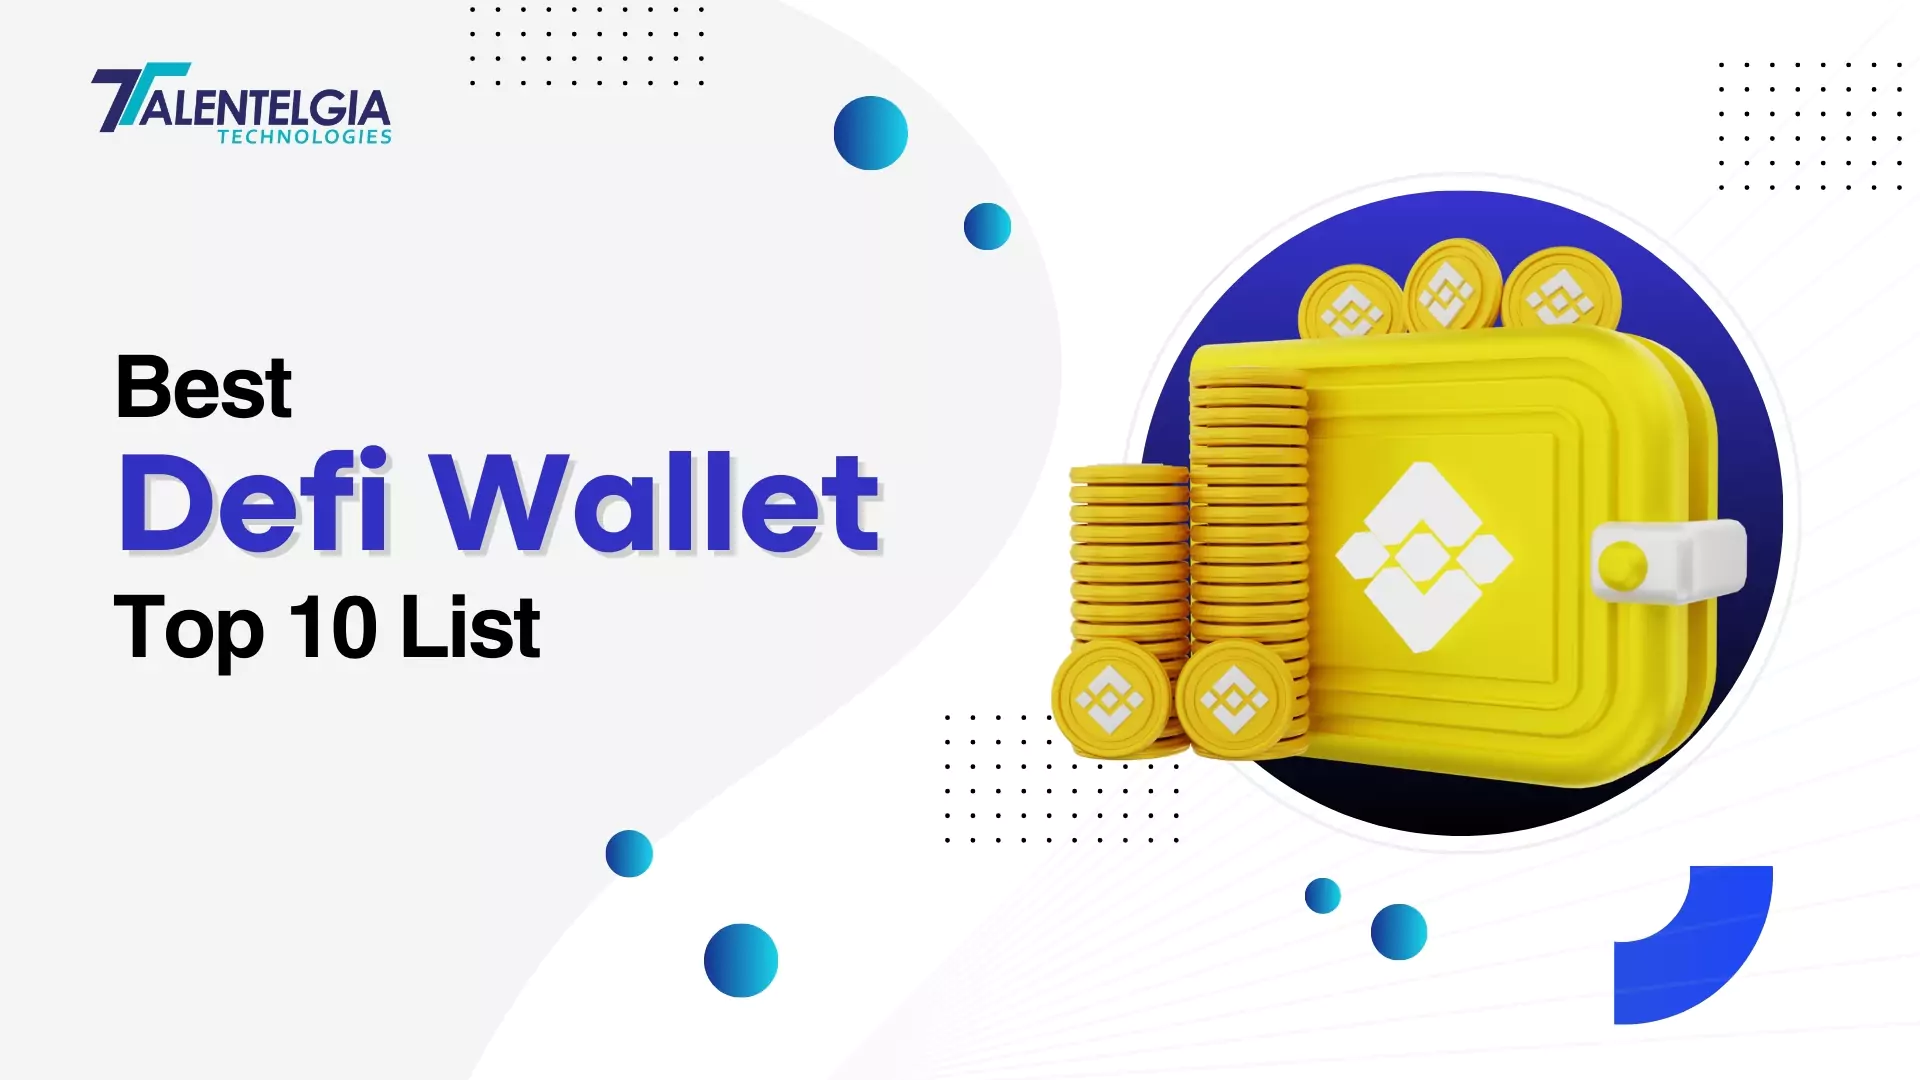 Best Defi Wallet - Top 10 List